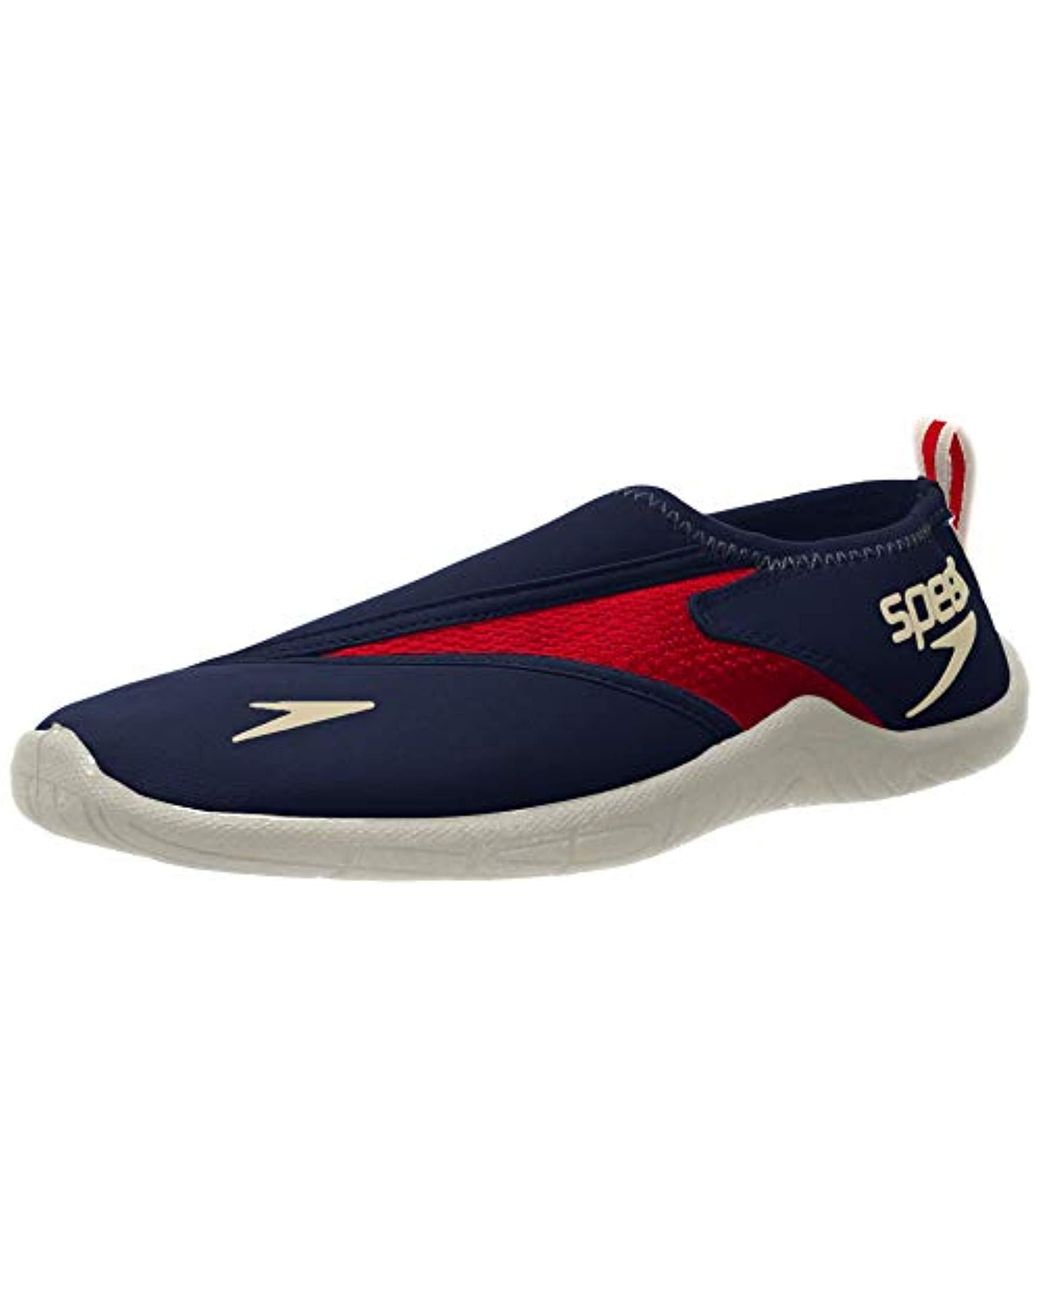 Visita lo Store di SpeedoSpeedo Surfwalker PRO 3.0 Water Shoes Scarpe da Surf da Uomo PRO 3.0 